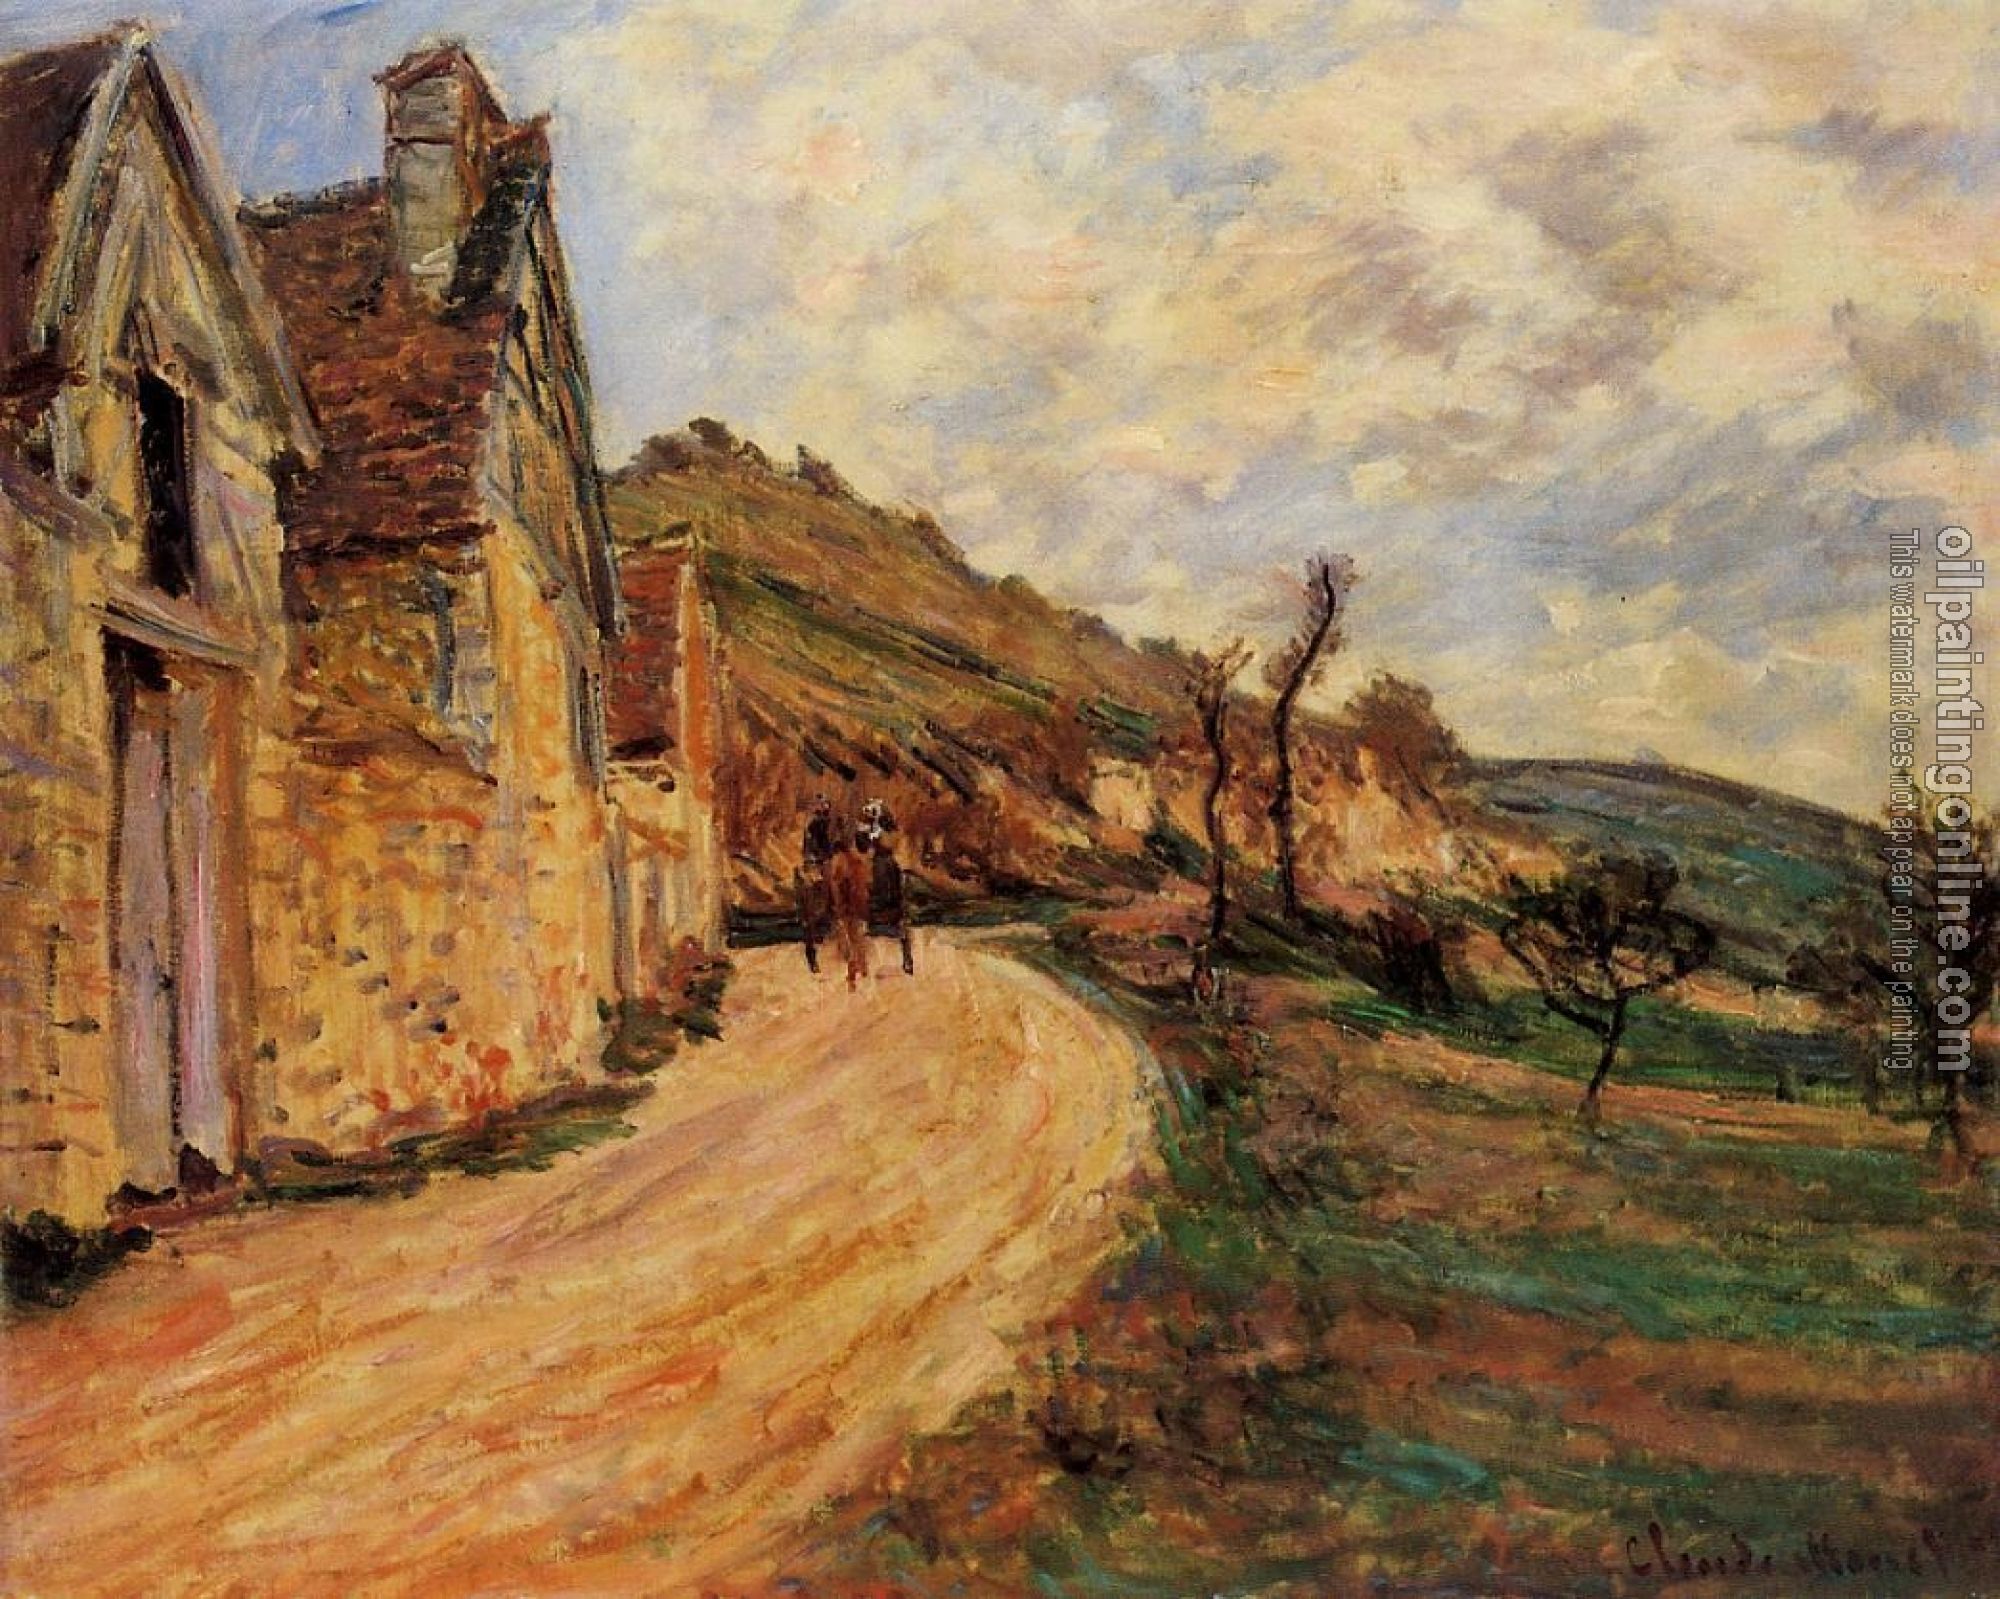 Monet, Claude Oscar - Les Roches at Falaise near Giverny